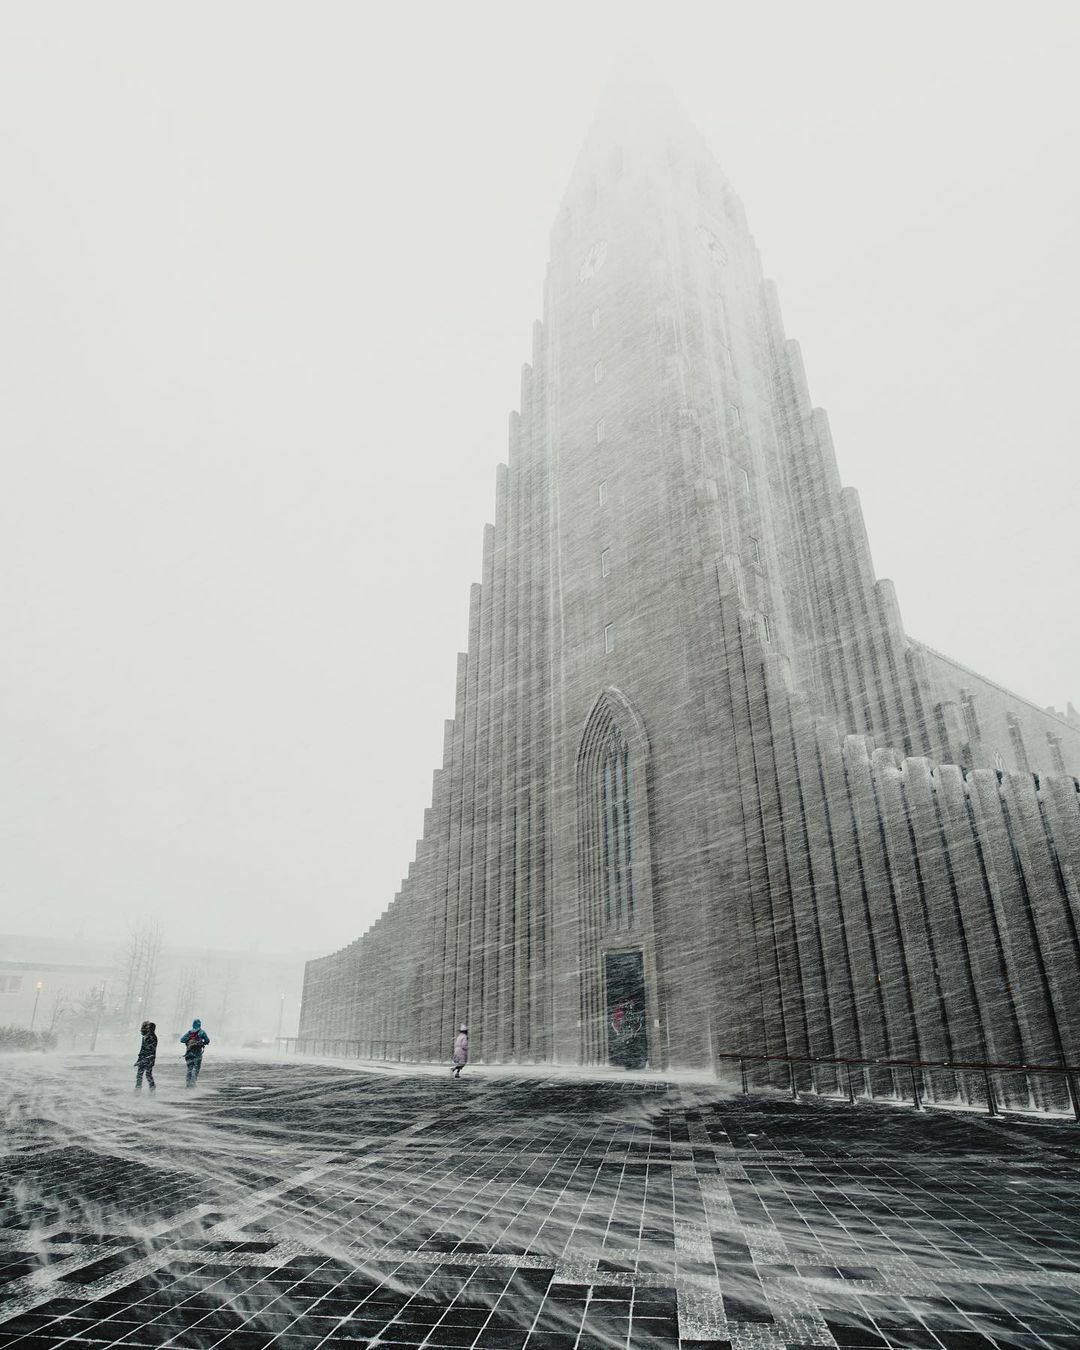 Winter Has Come In Iceland. Hallgrímskirkja In Reykjavík. Photo By Gunnar Freyr